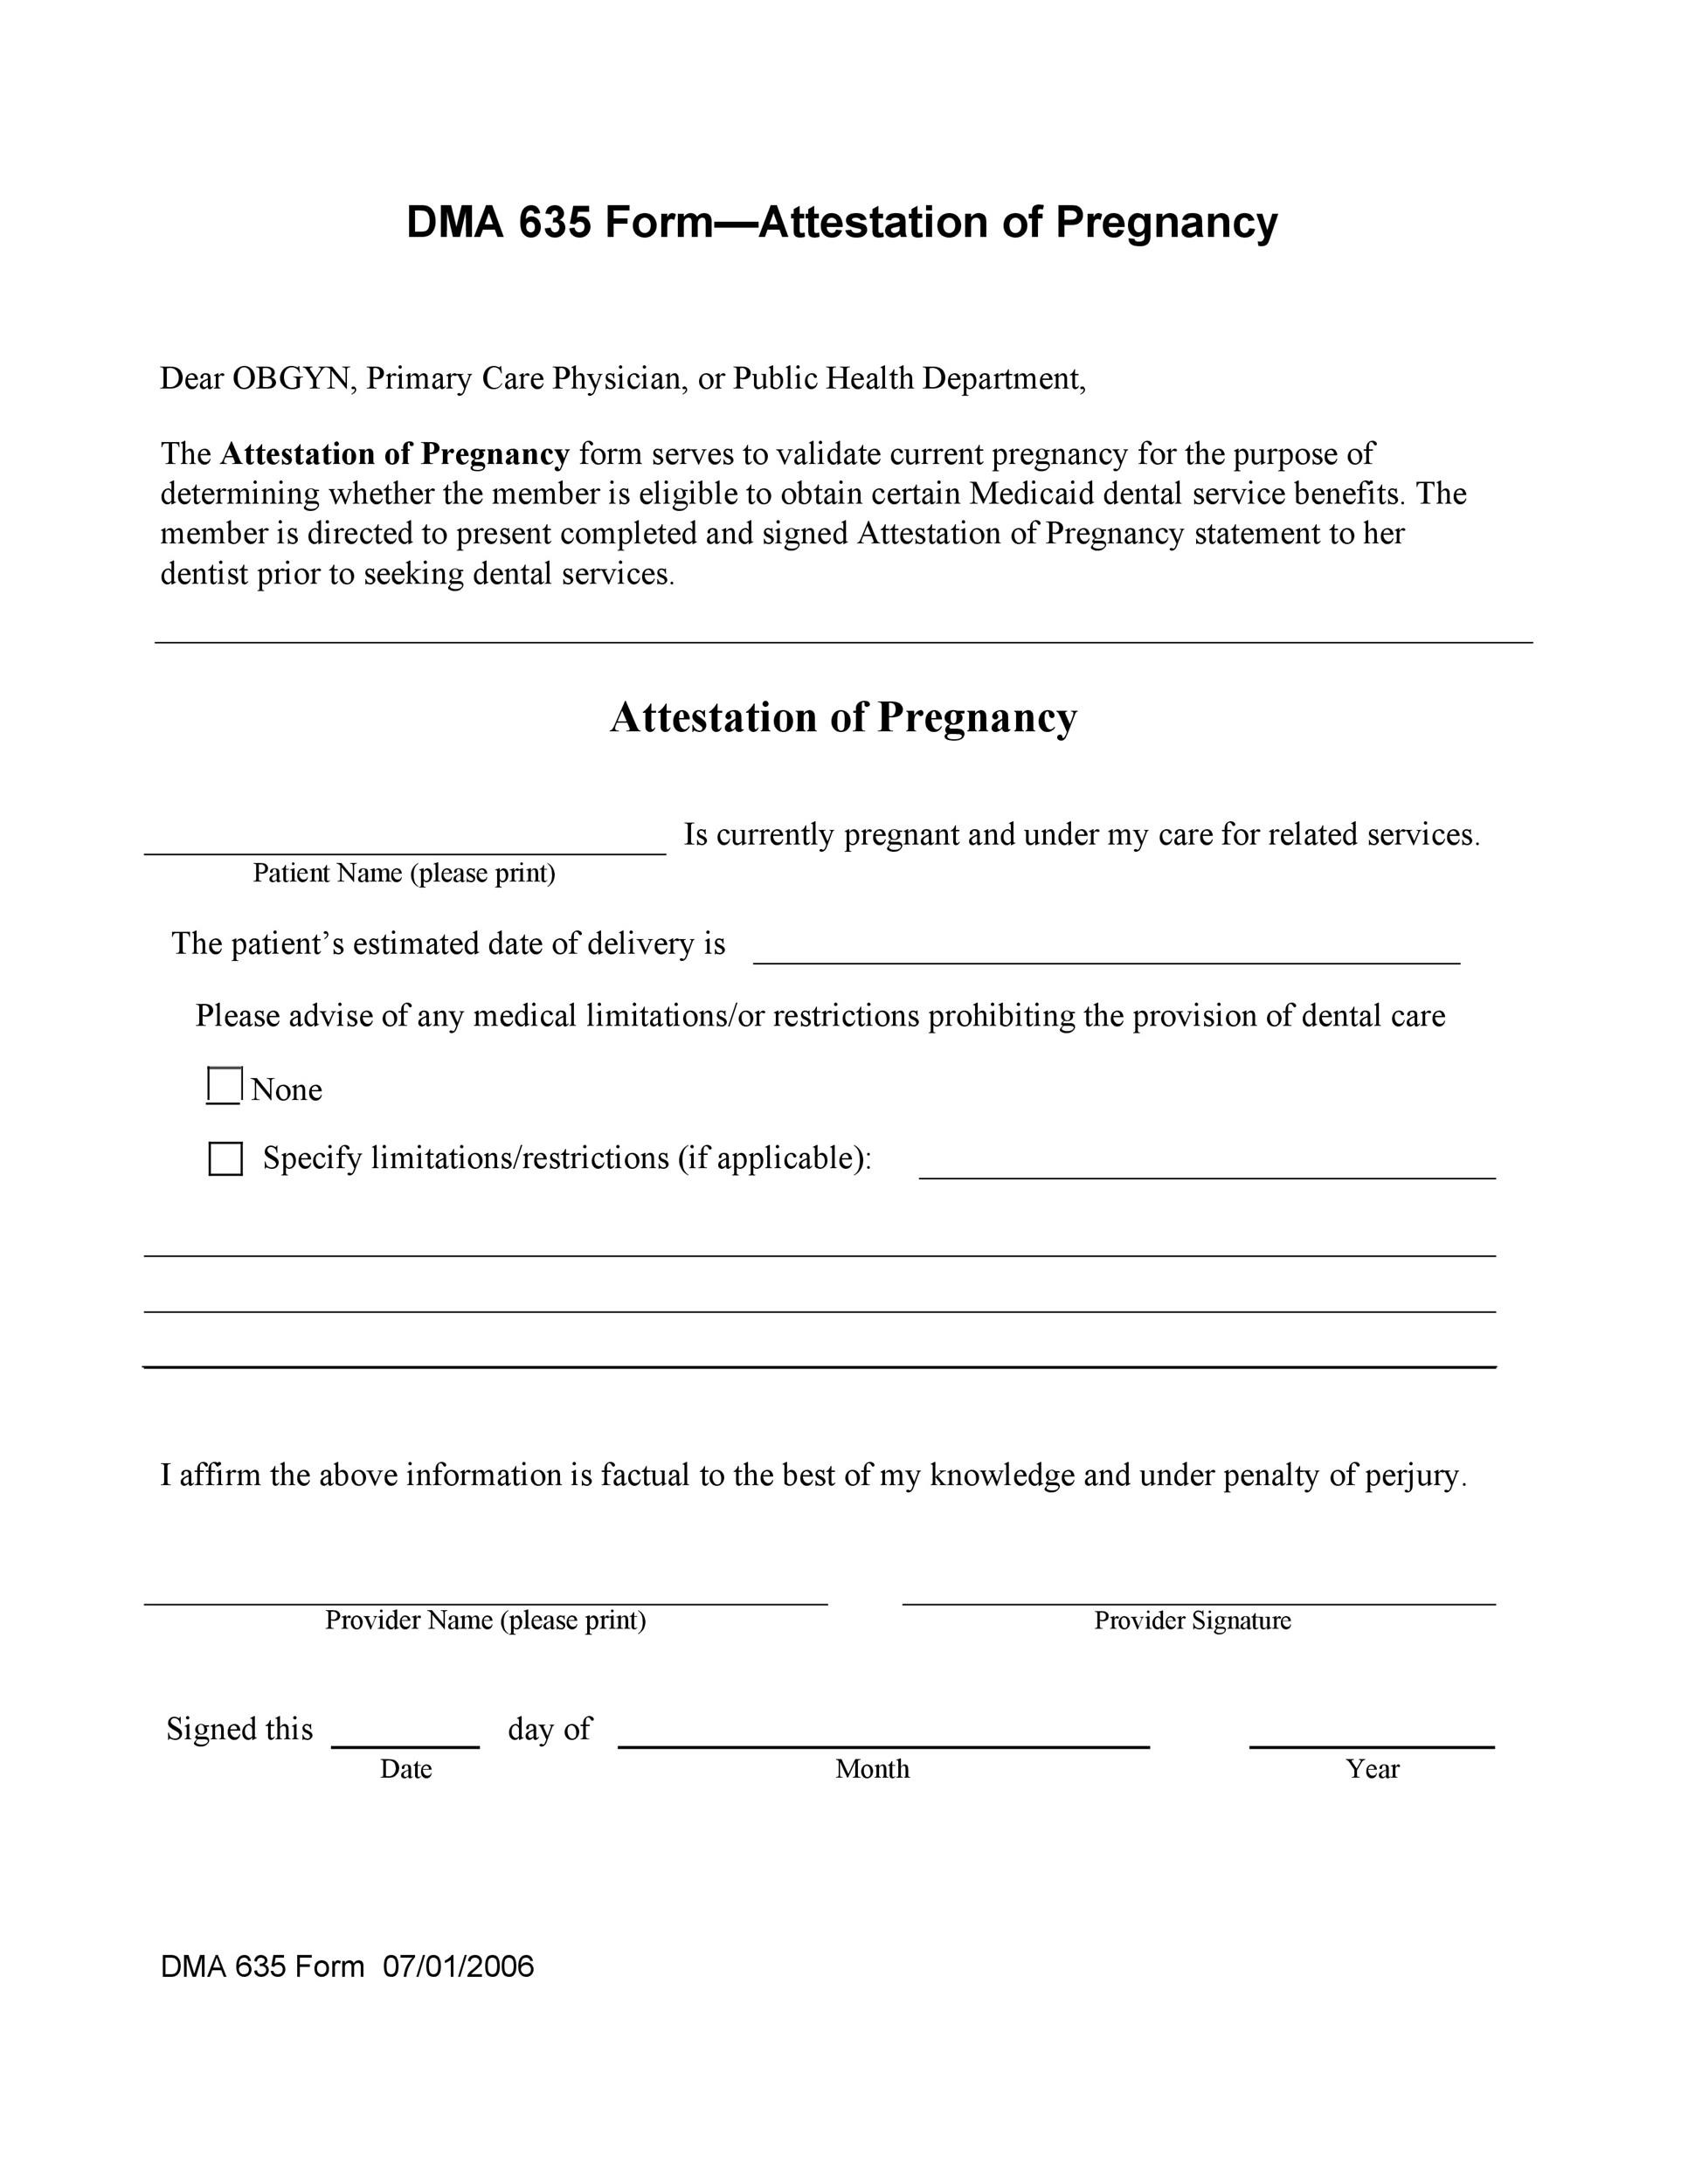 Printable Positive Pregnancy Test Form